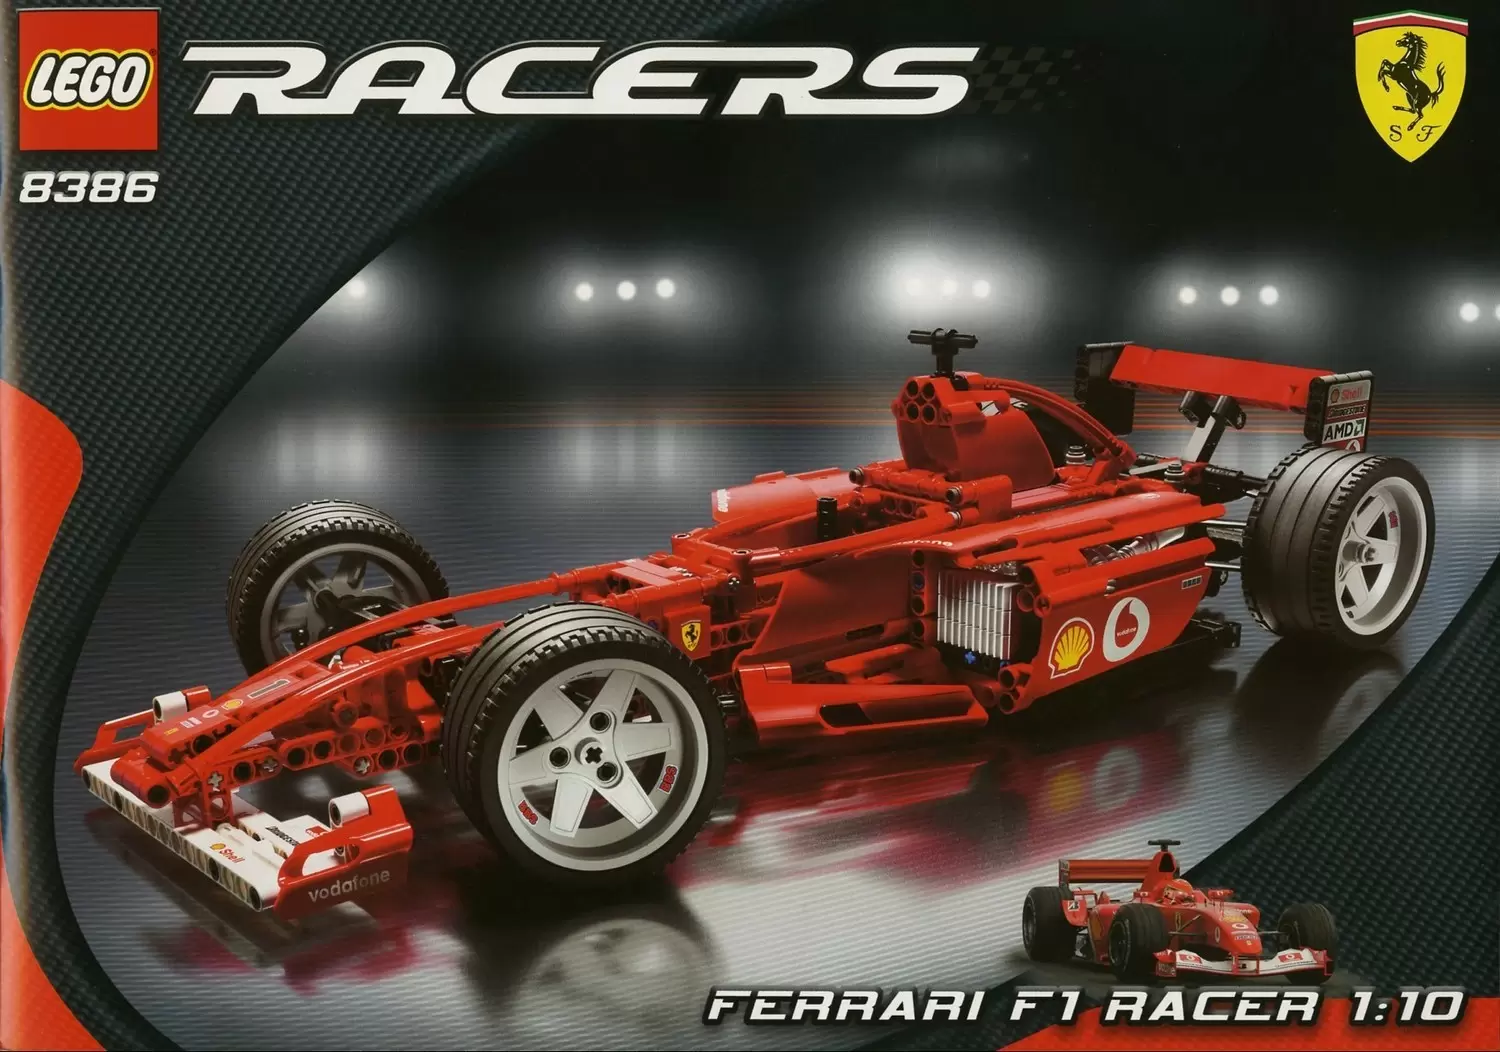 LEGO Racers - Ferrari F1 Racer 1:10